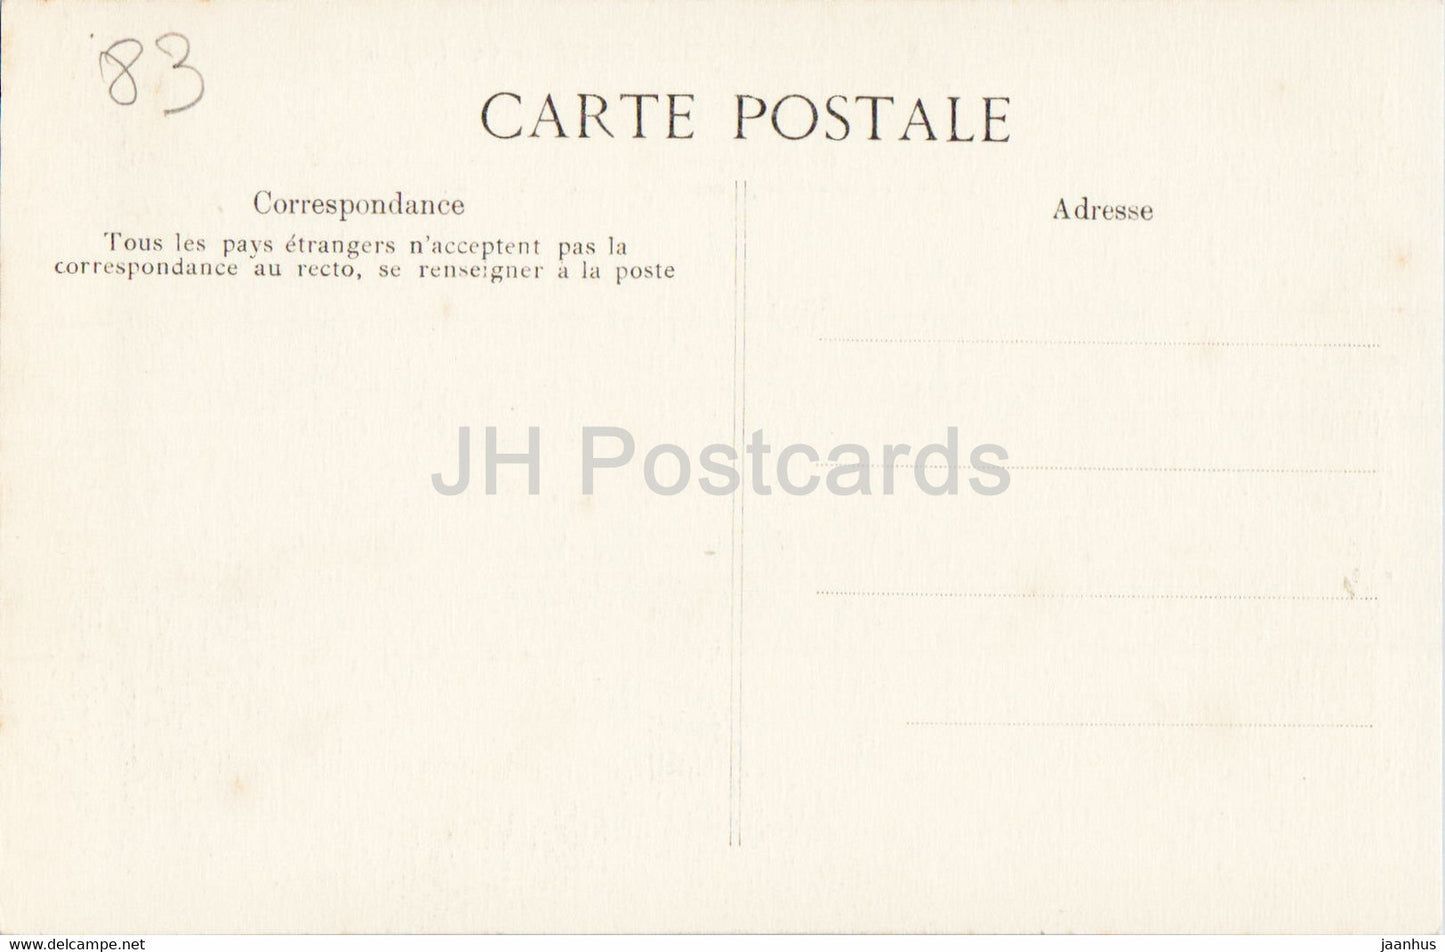 Abbaye du Thoronet - Les Cachots - 8 - old postcard - France - unused